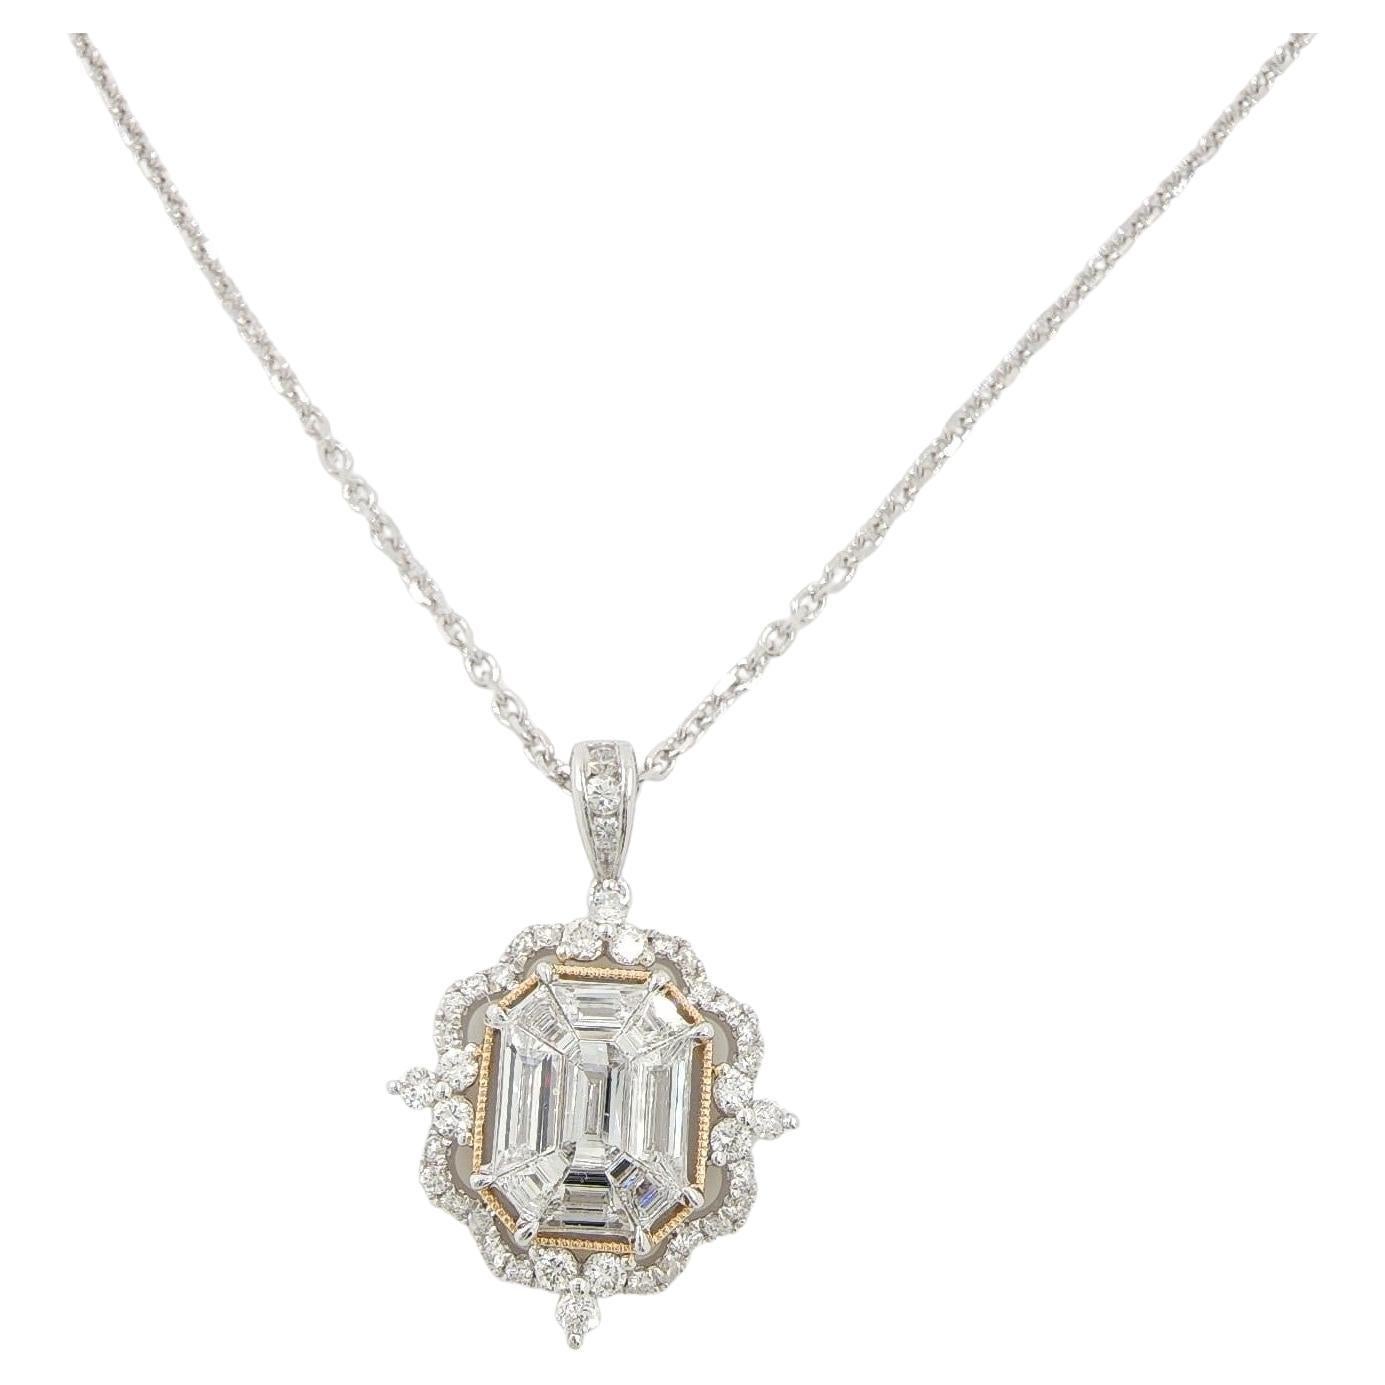 Collier pendentif diamant en or rose et blanc 18K avec sertissage Illusion